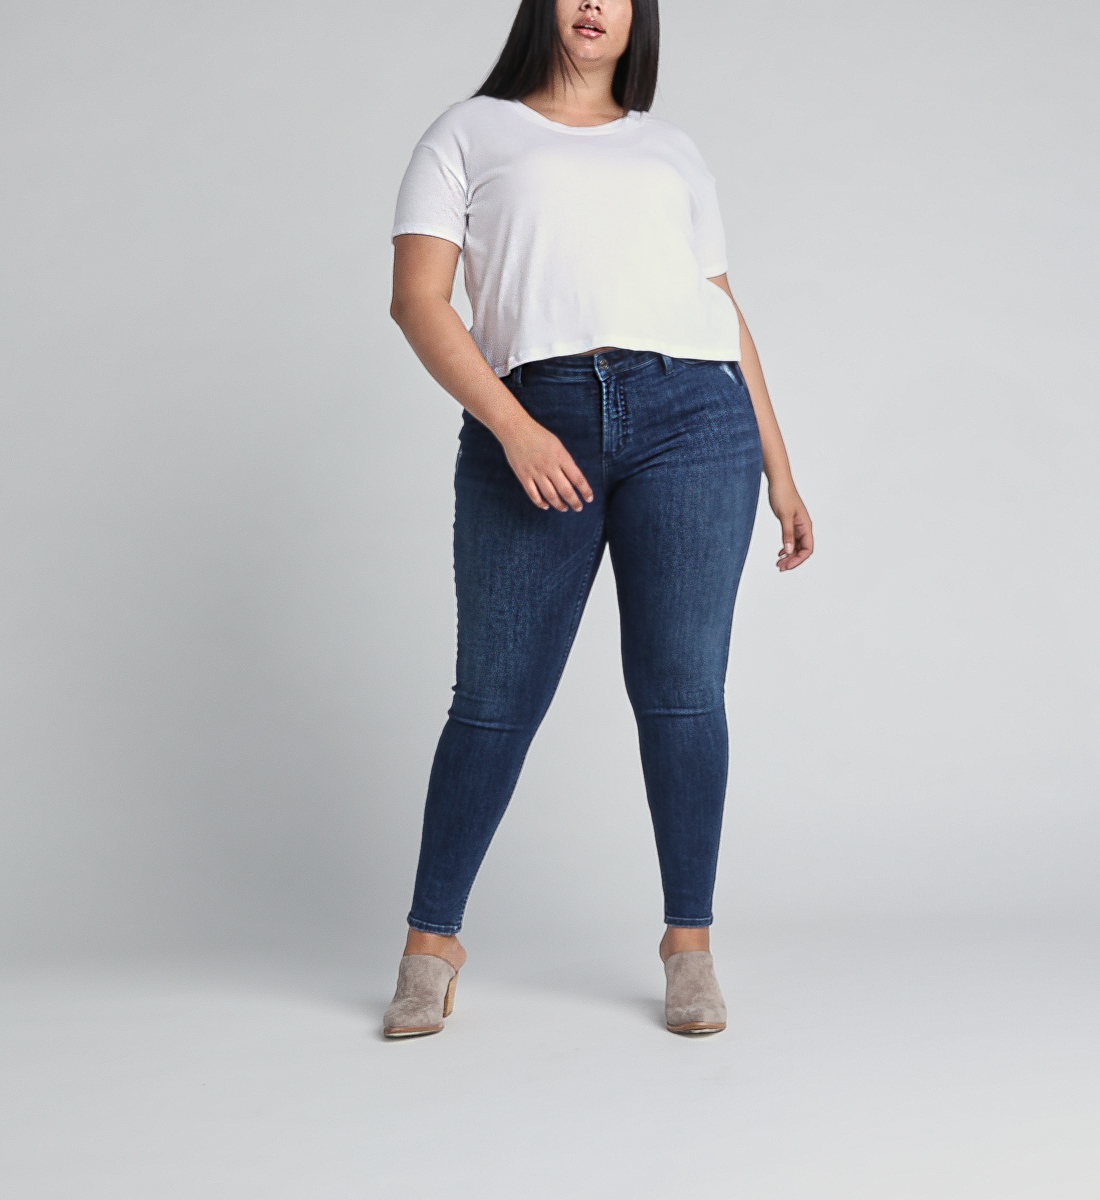 silver jeans women's plus size